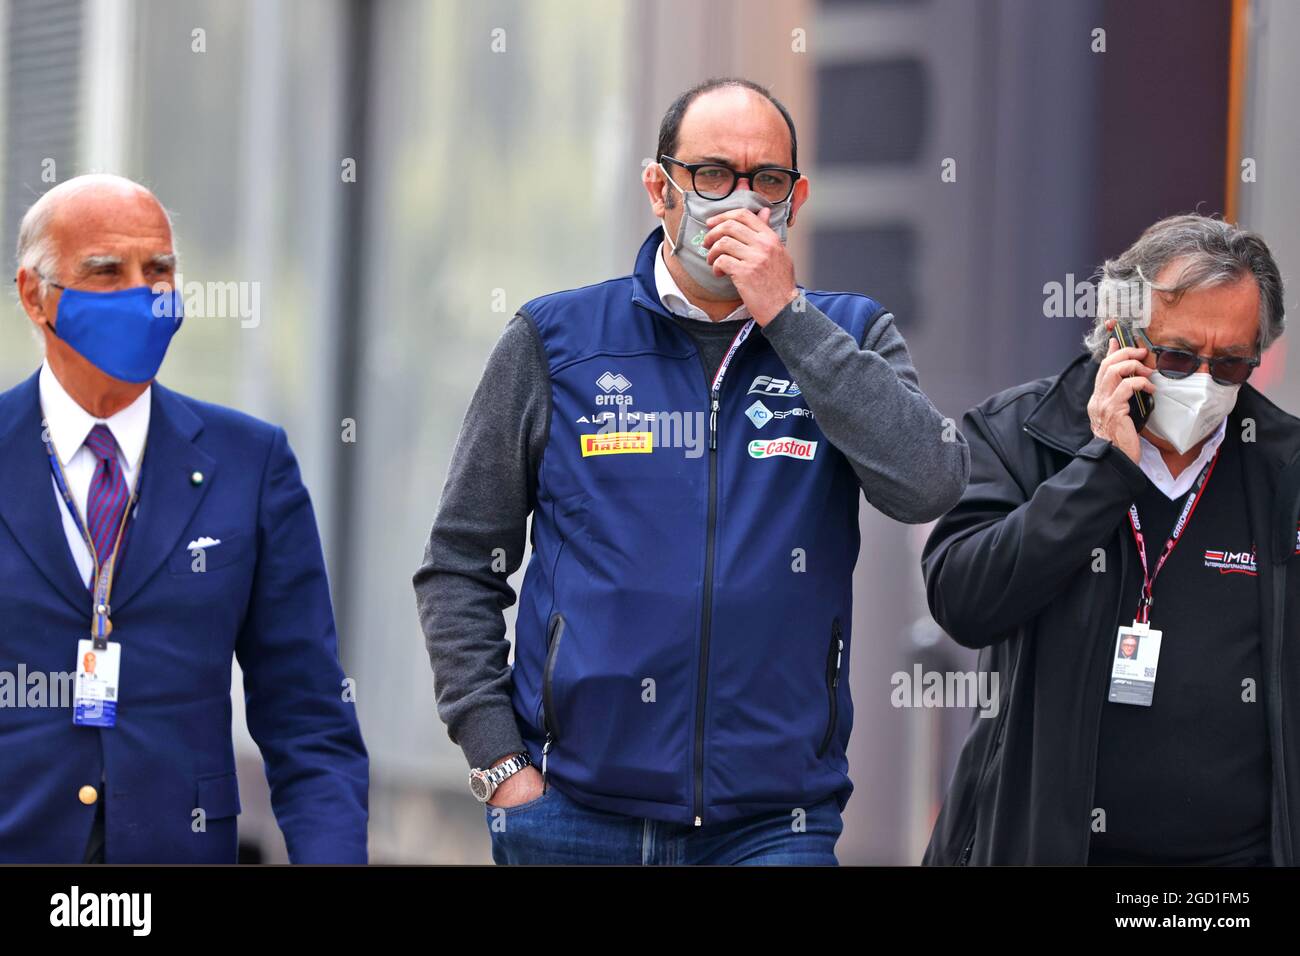 Dr. Angelo Sticchi Damiani (ITA) Aci Csai President (Left) and Giancarlo Minardi (ITA (Right). Emilia Romagna Grand Prix, Sunday 18th April 2021. Imola, Italy. Stock Photo